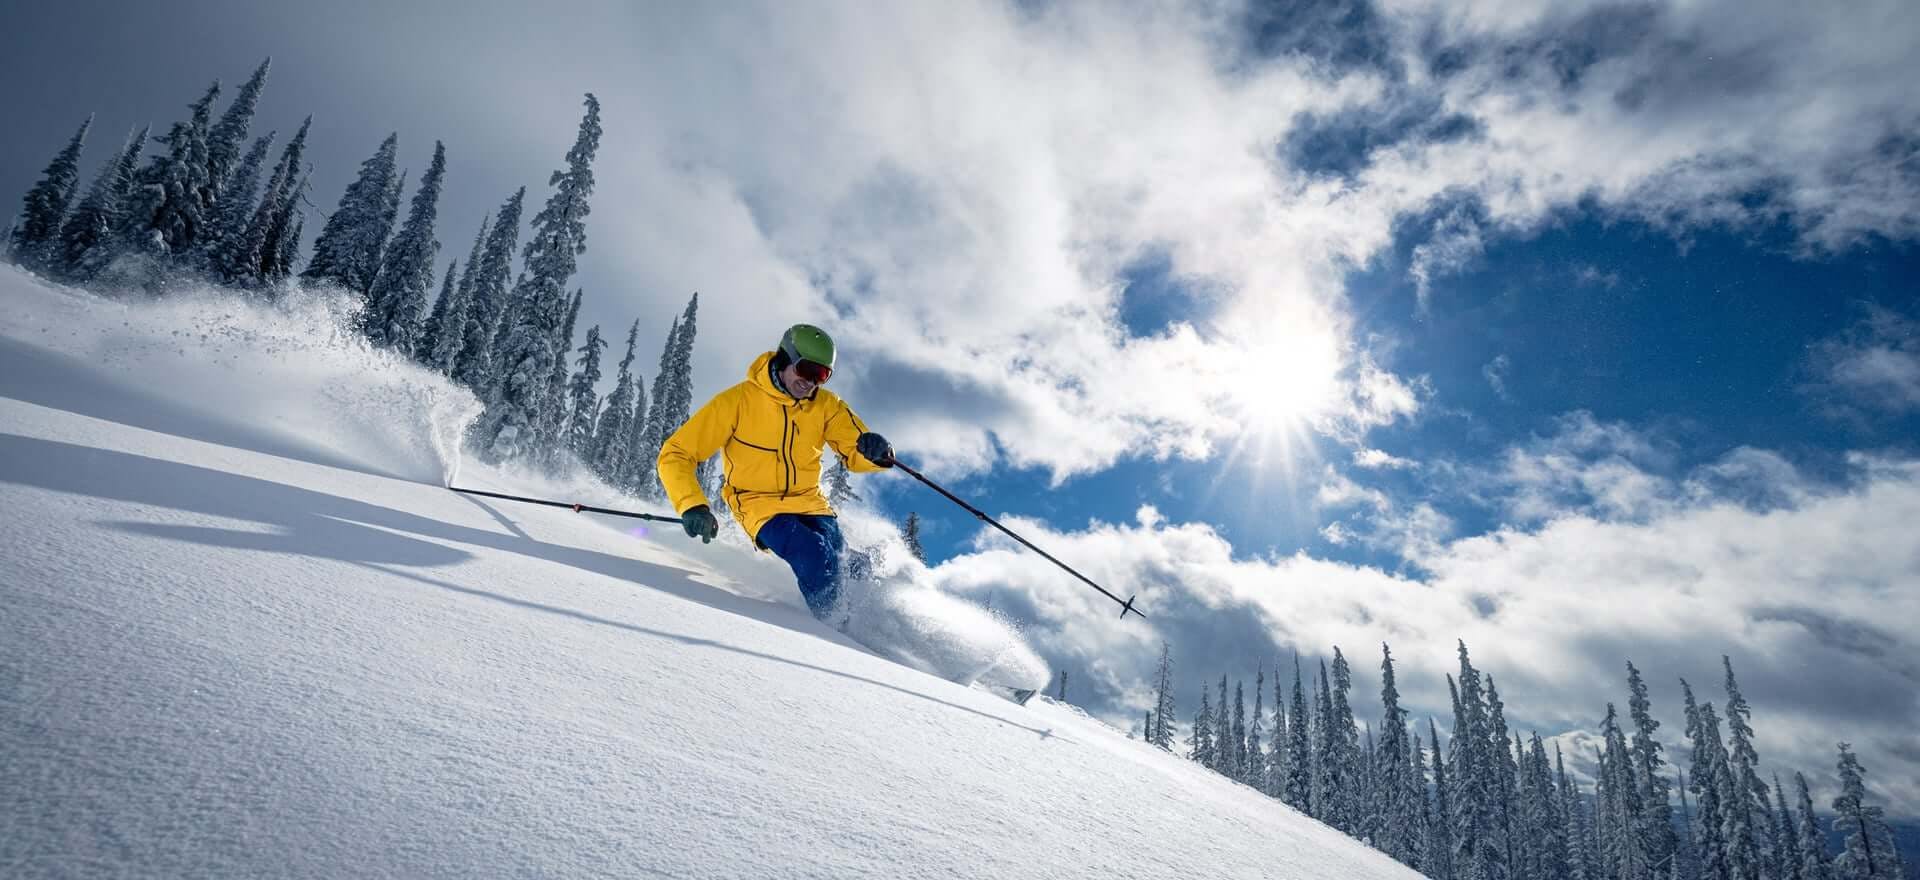 Villas for Skiing Vacations